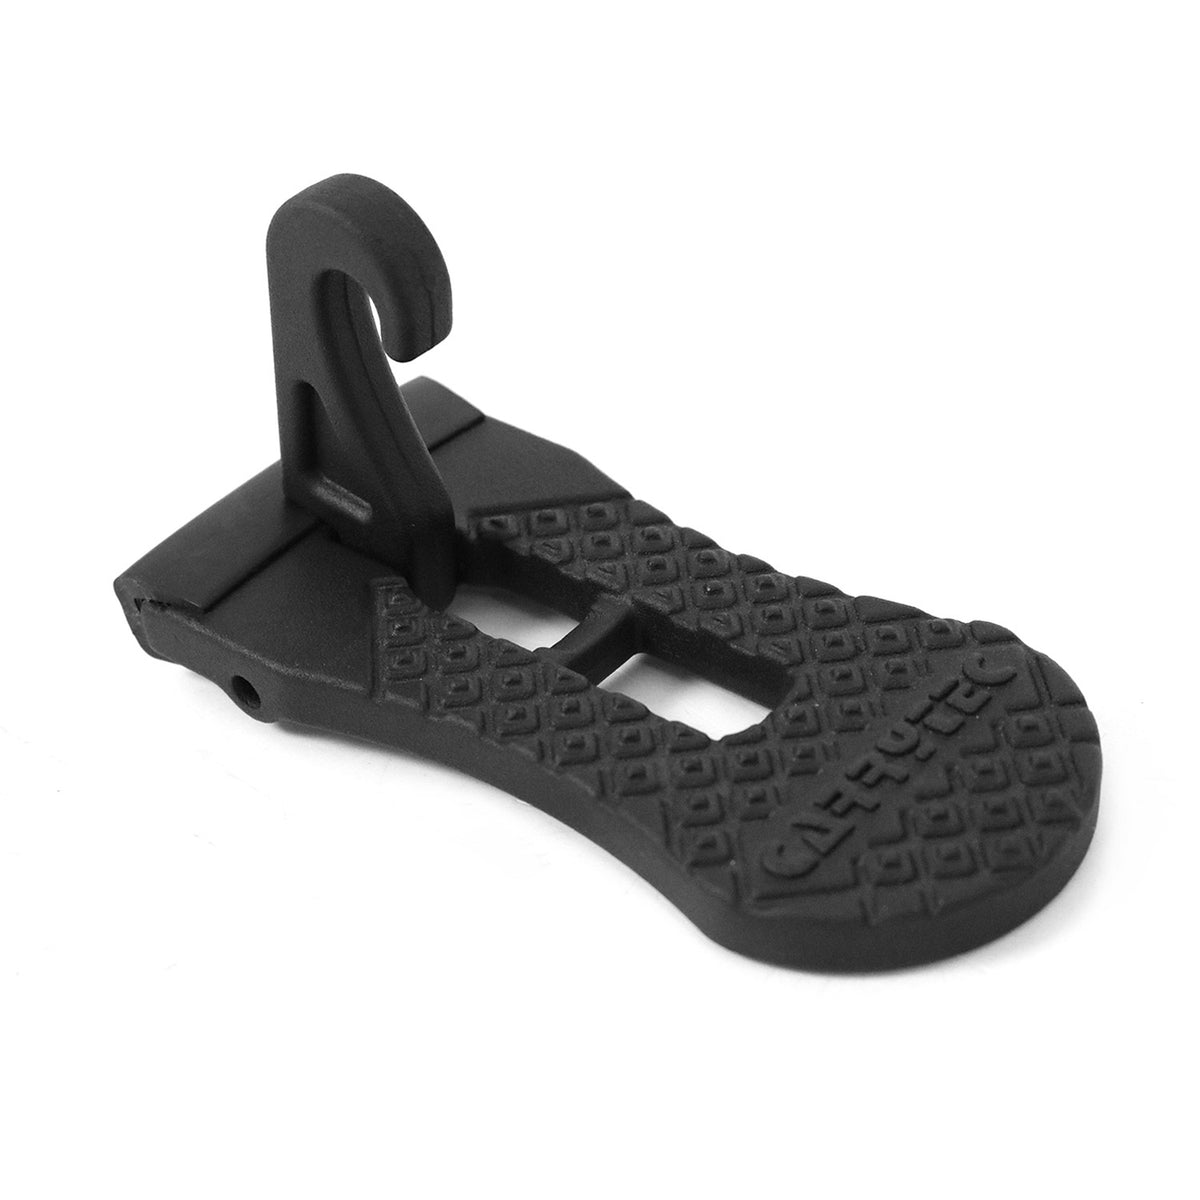 Door pedal footrest foldable for Jeep Commander Cherokee Compass aluminum black